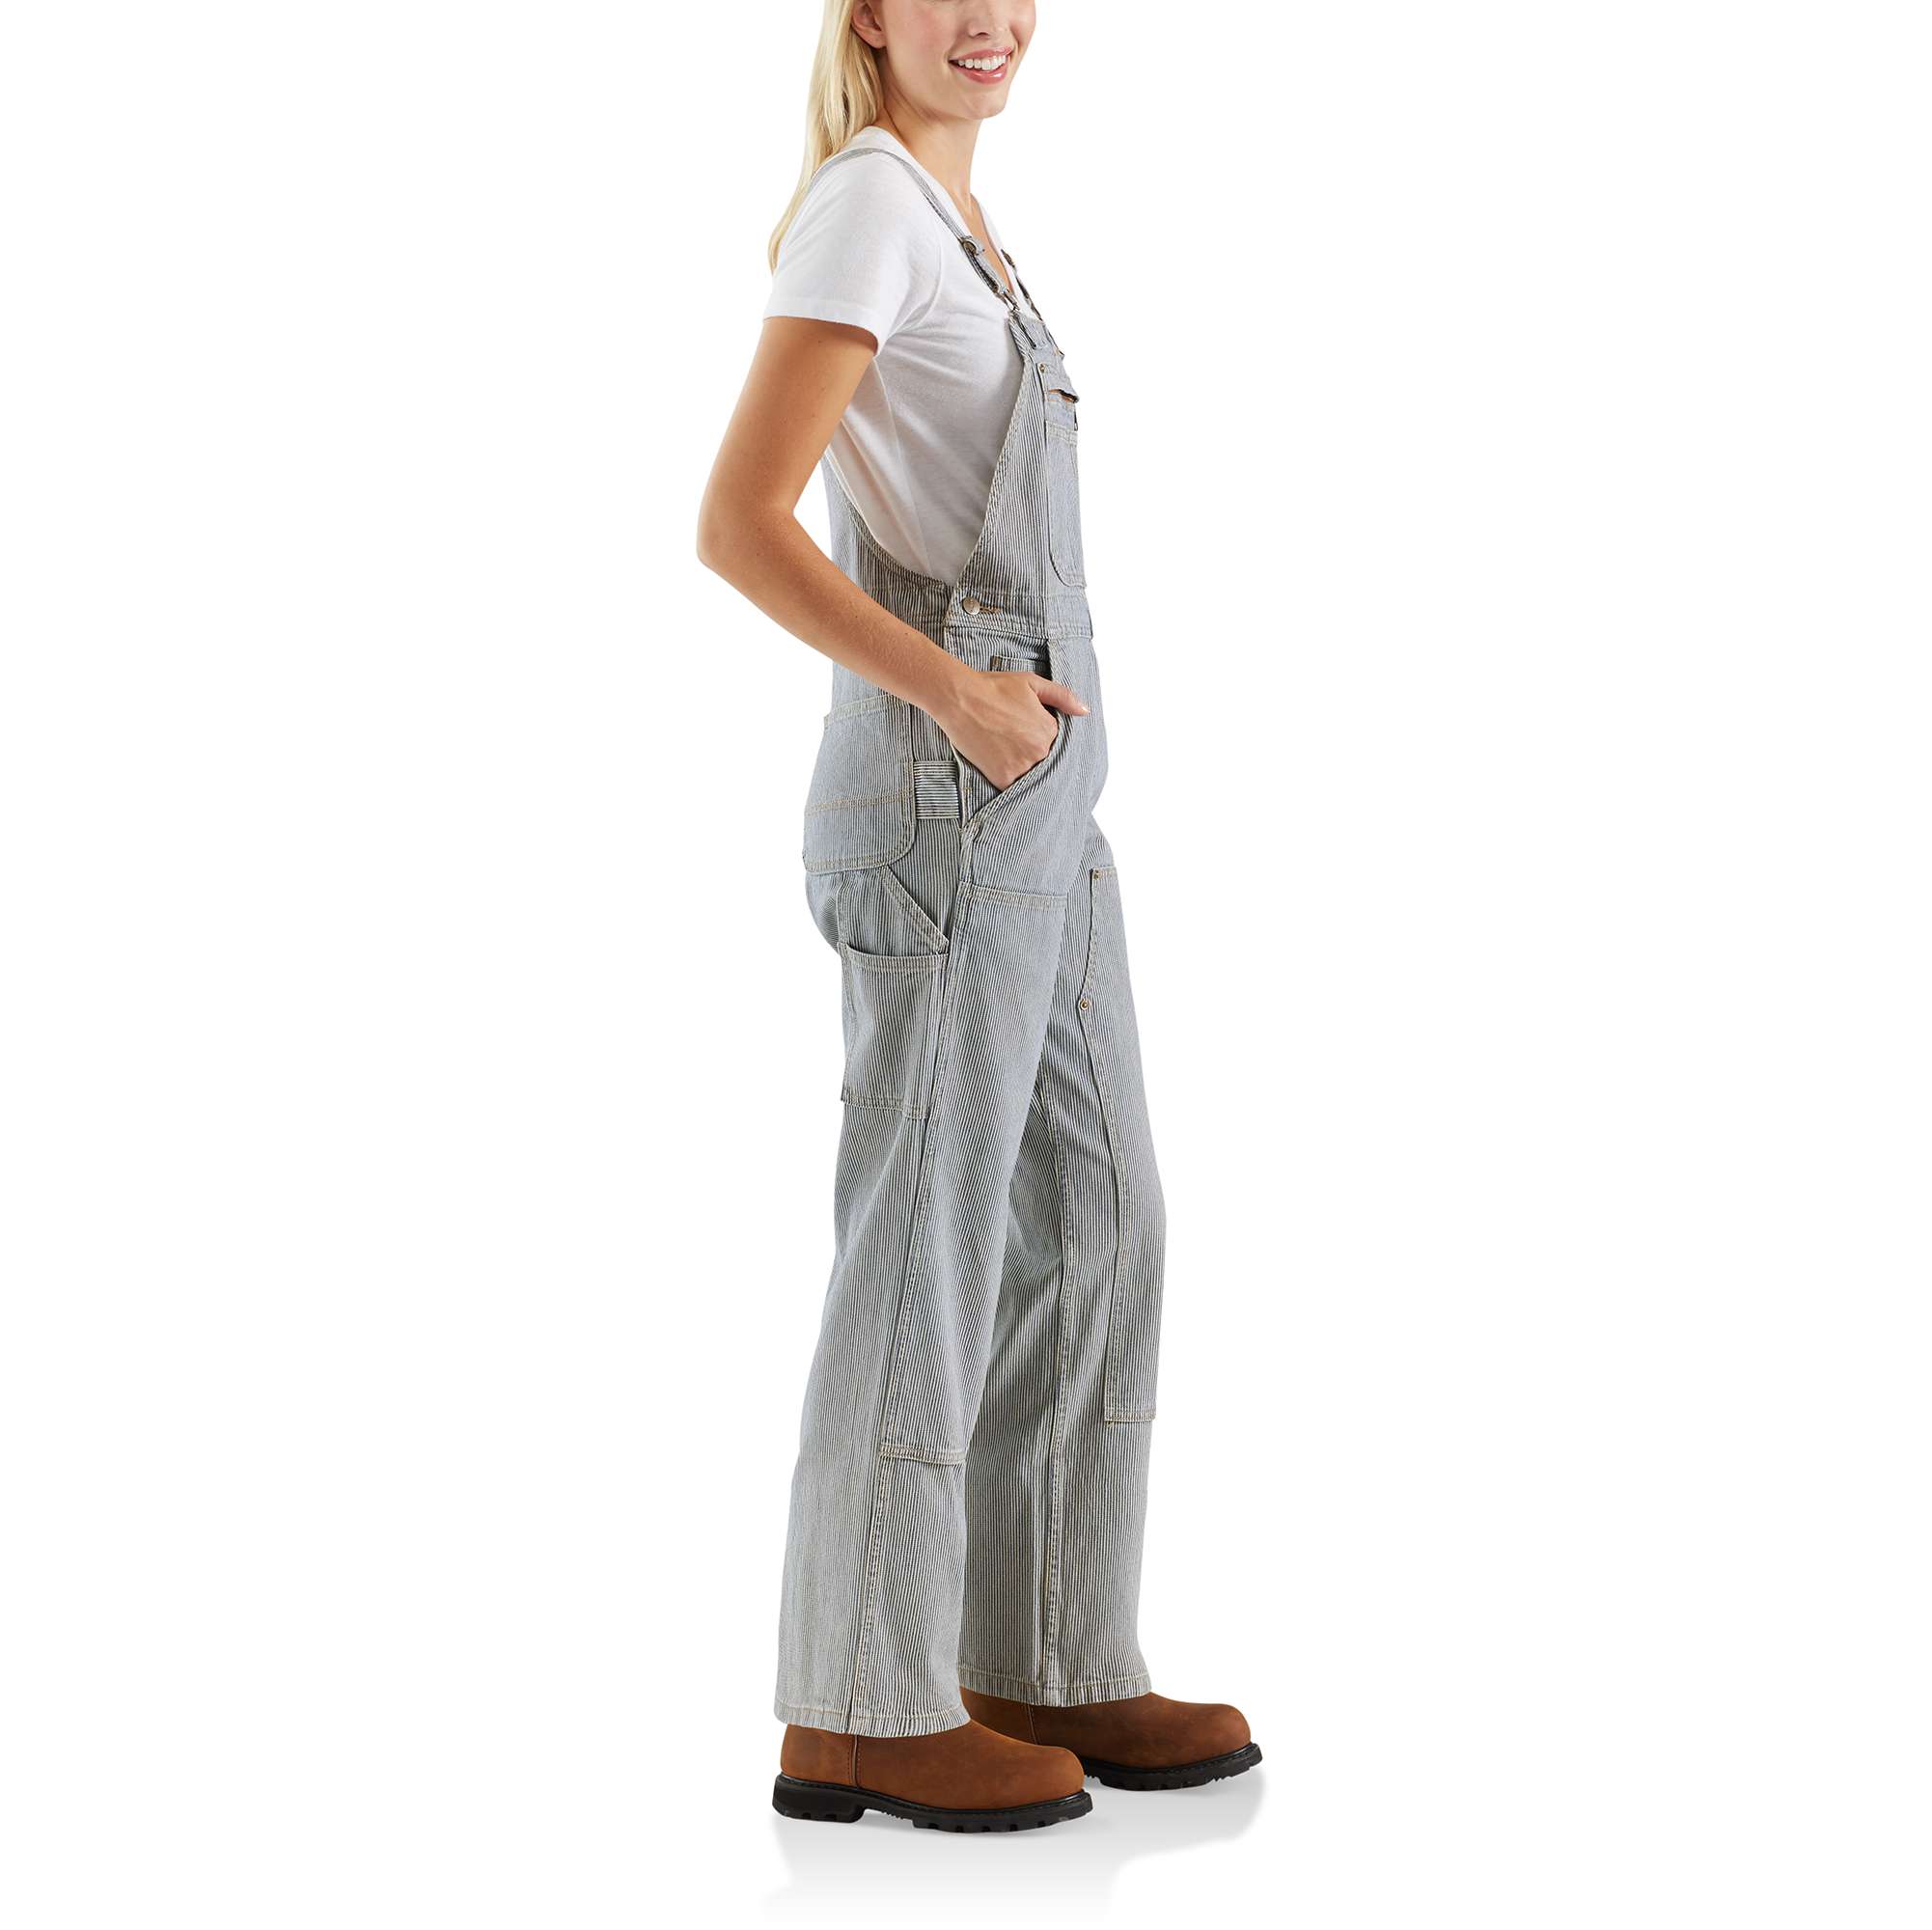 Carhartt Women's Stripe Sleeveless Twill Overall (Medium) in the